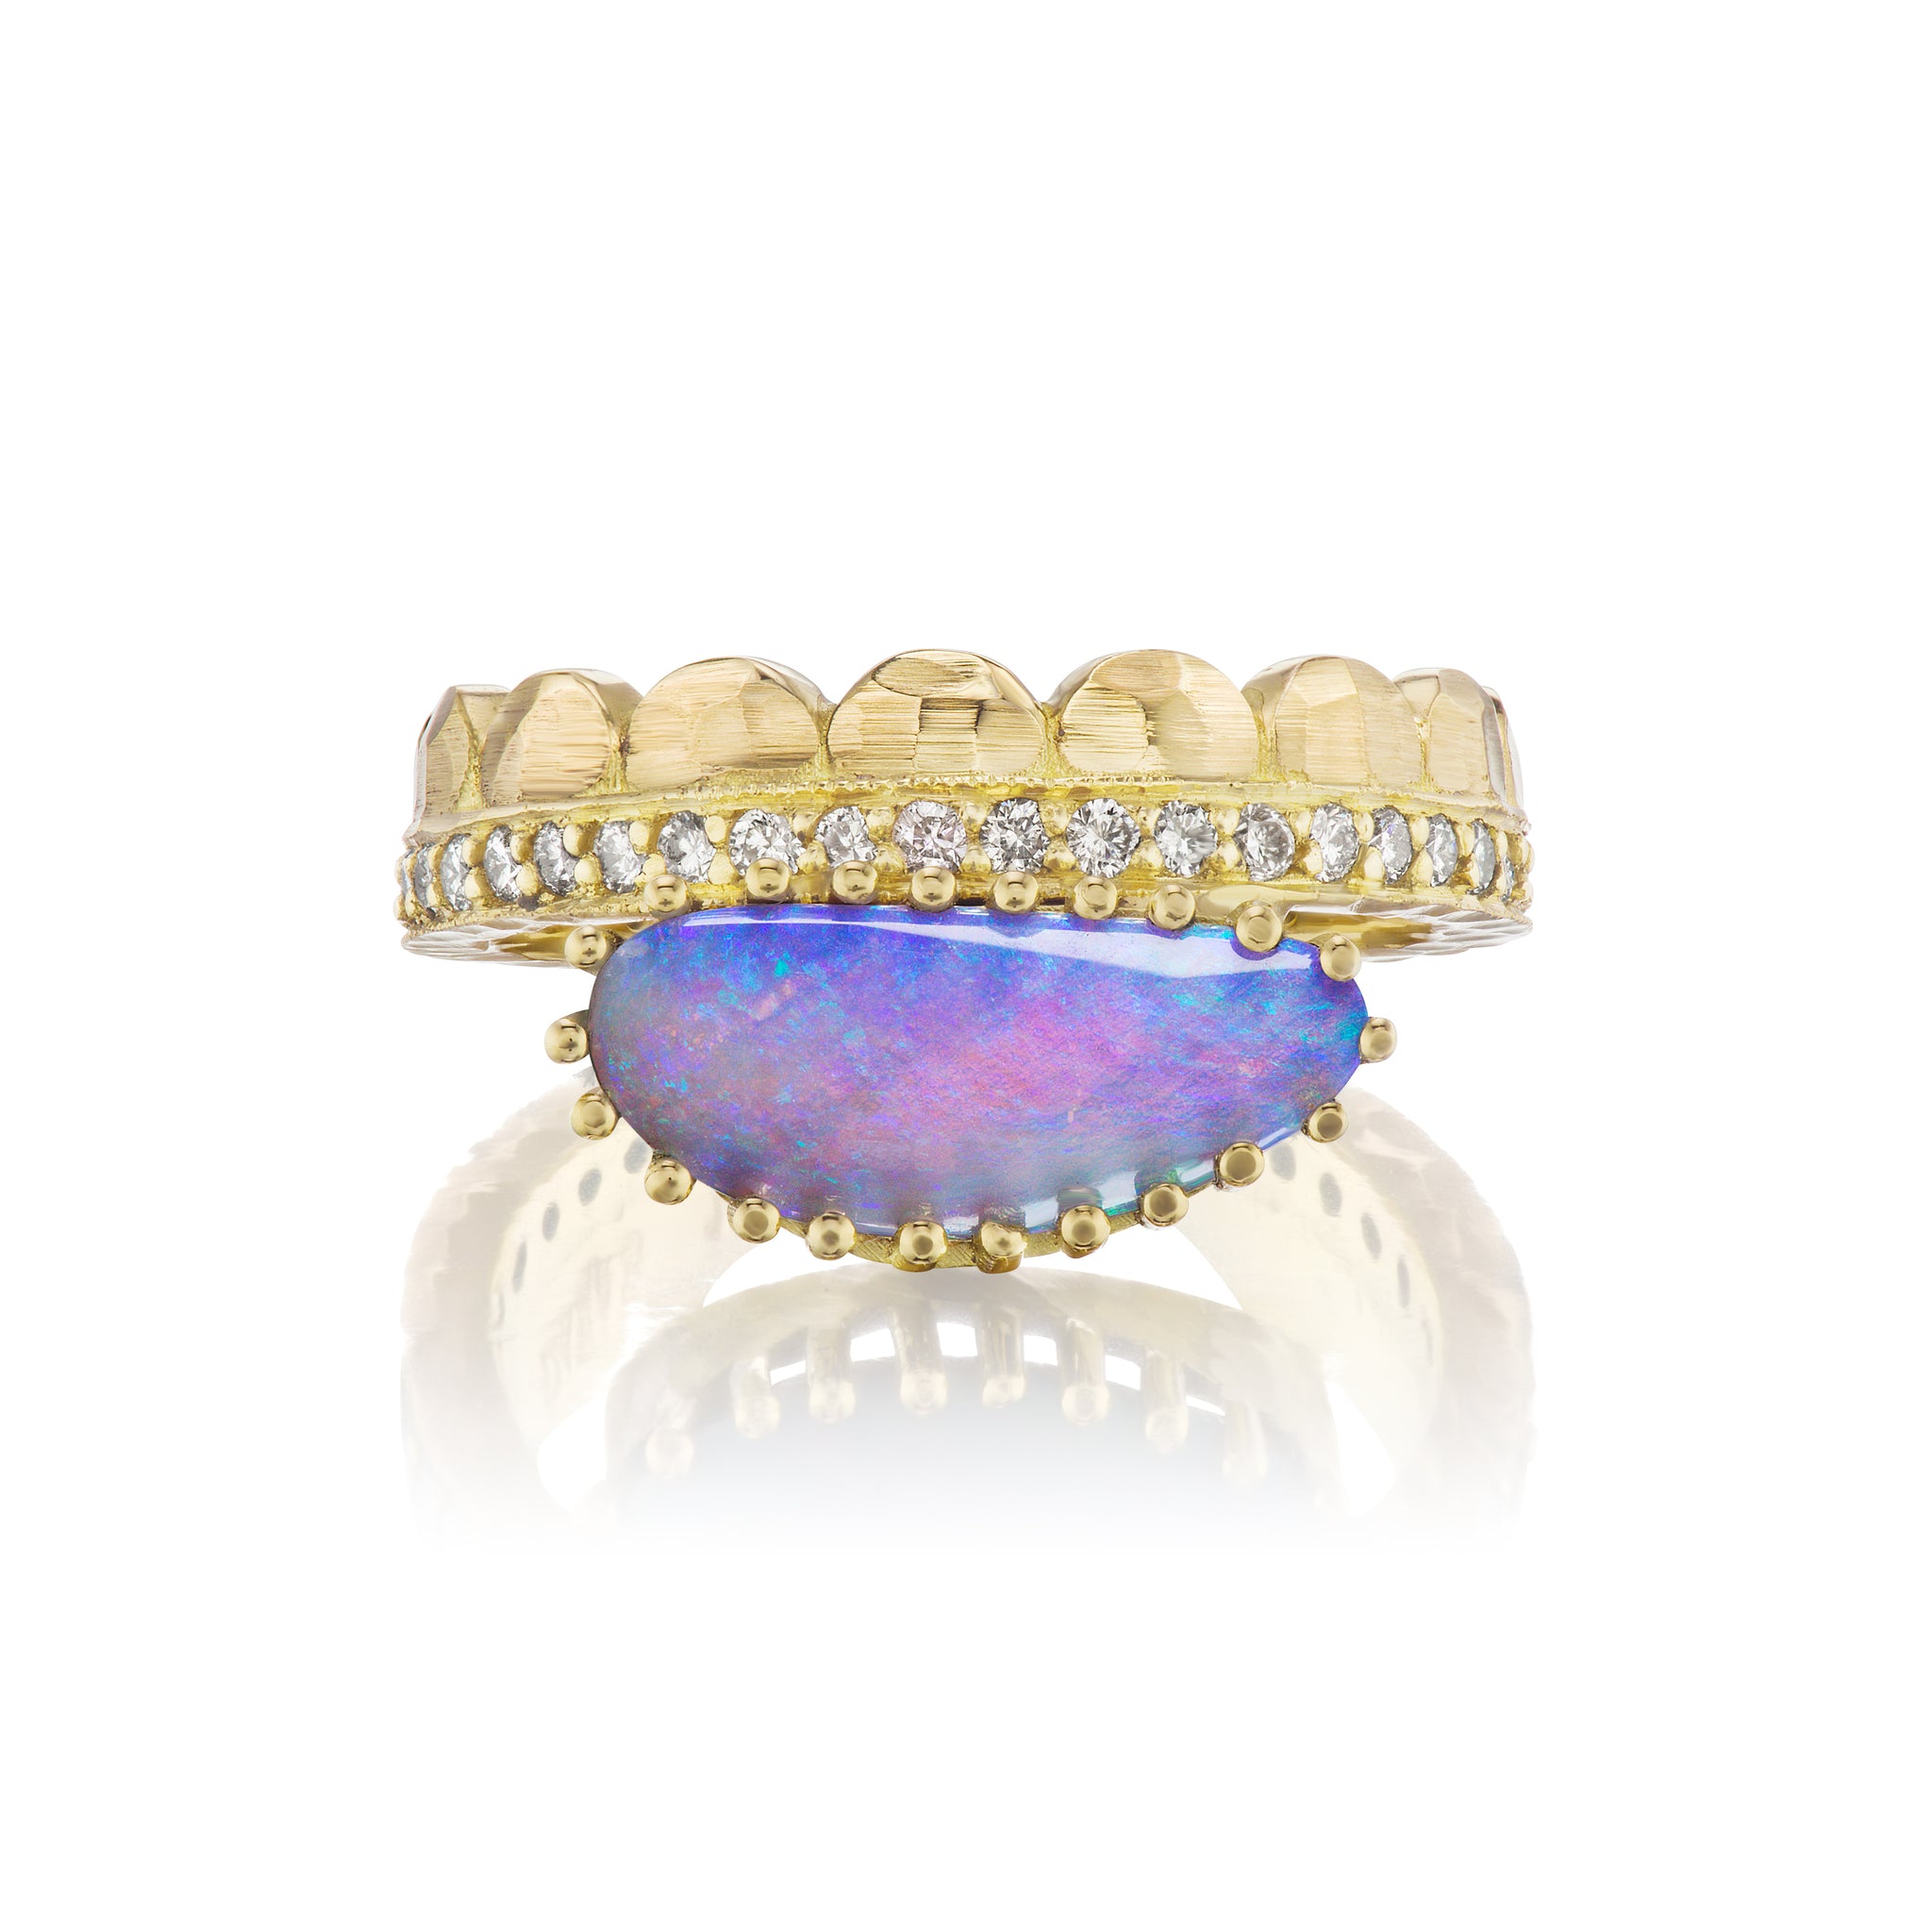 Half Moon Crown Ring with Australian Opal